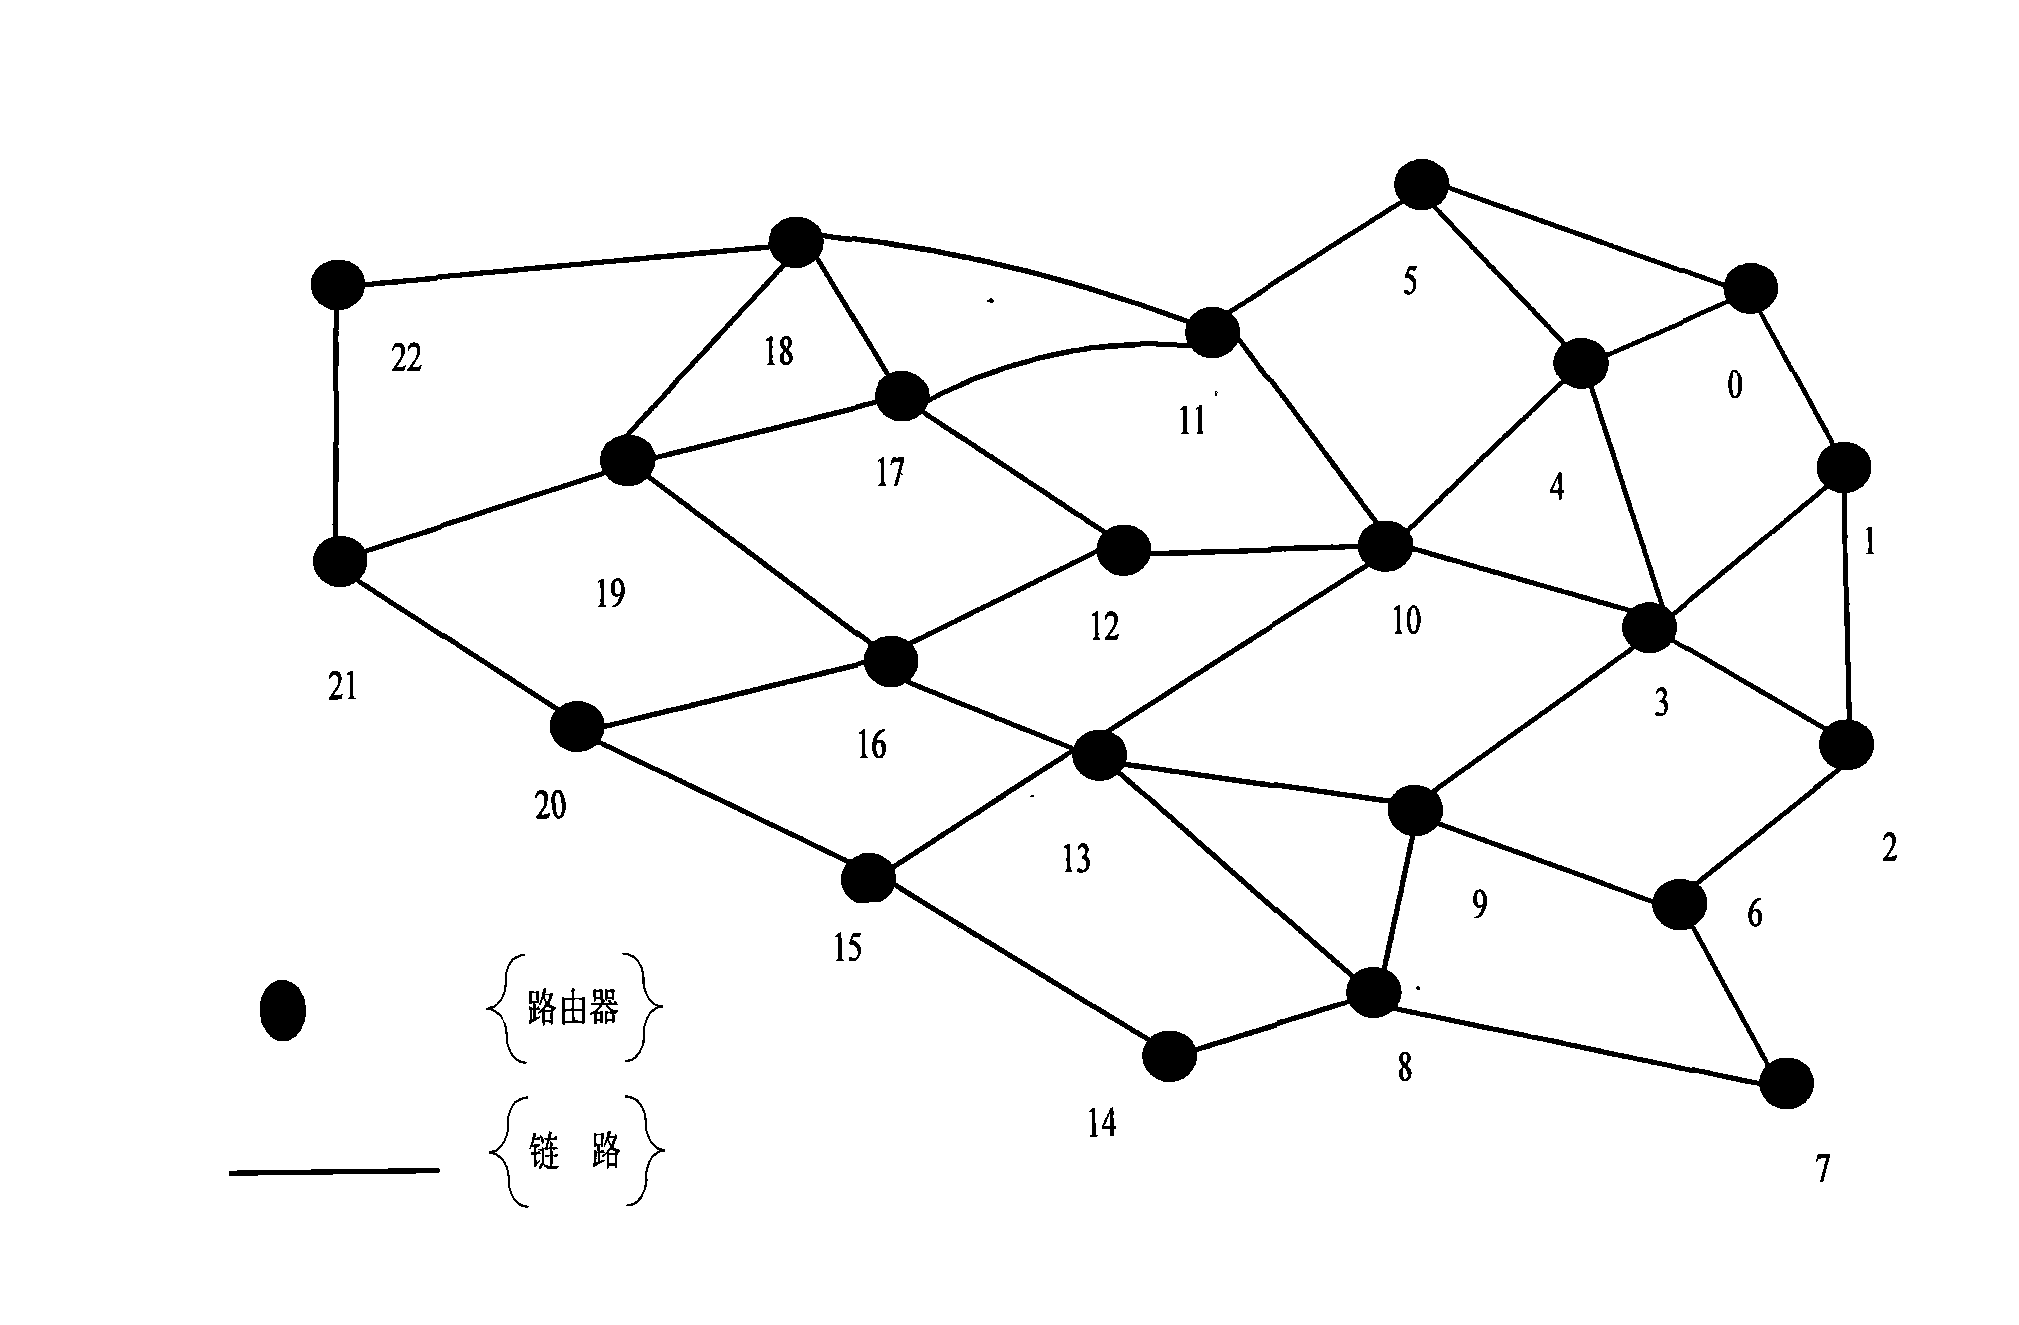 Self-organizing QoS routing method based on ant colony algorithm